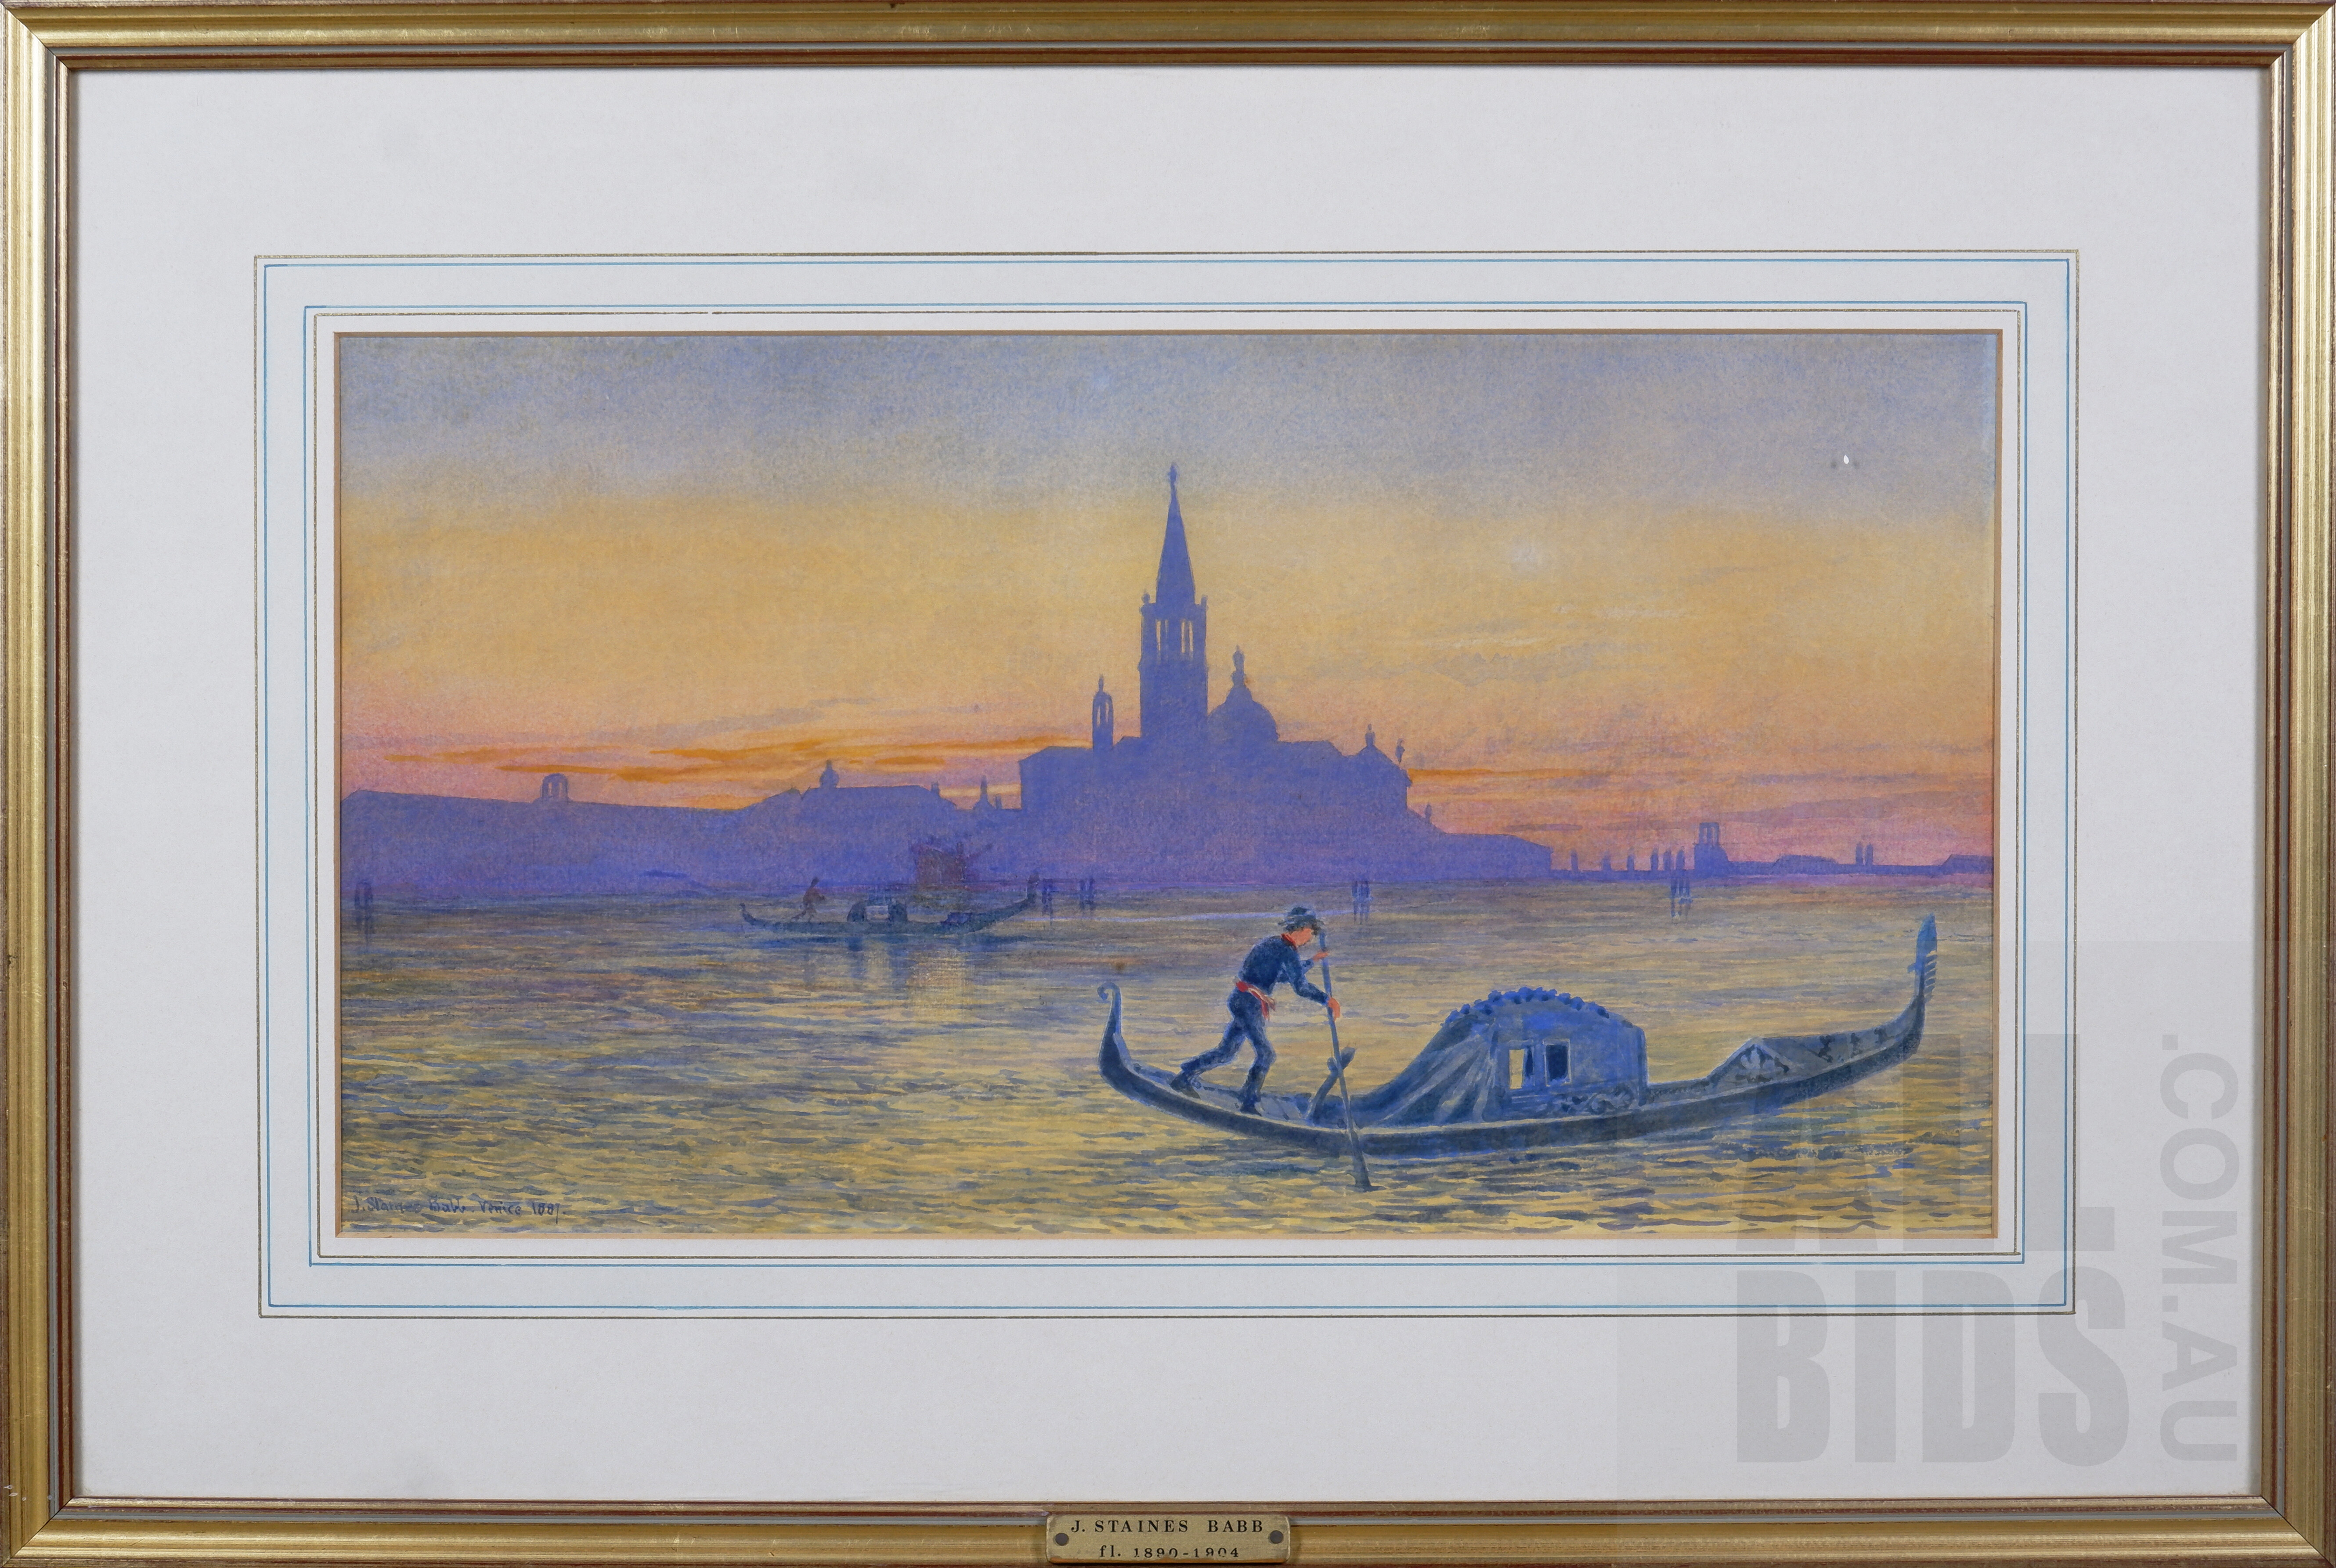 'John Staines Babb (active 1870-1904), Venice 1887, Watercolour, 24 x 44.5 cm'